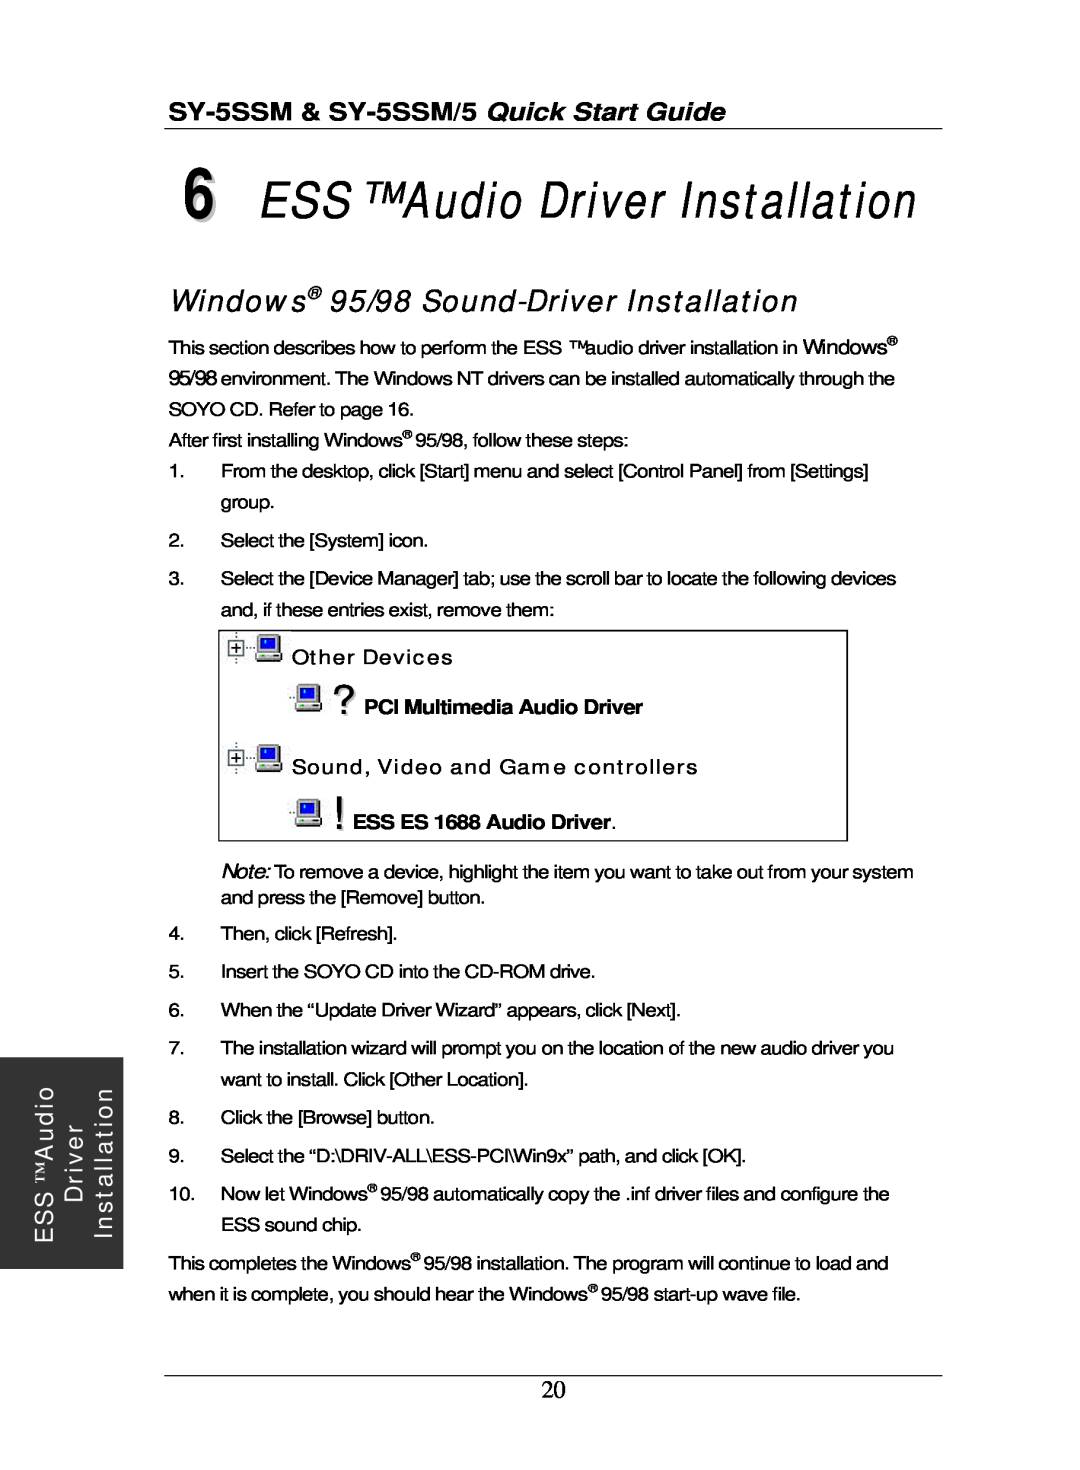 SOYO SY-5SSM/5 quick start Windows 95/98 Sound-Driver Installation, ESS Audio Driver Installation 